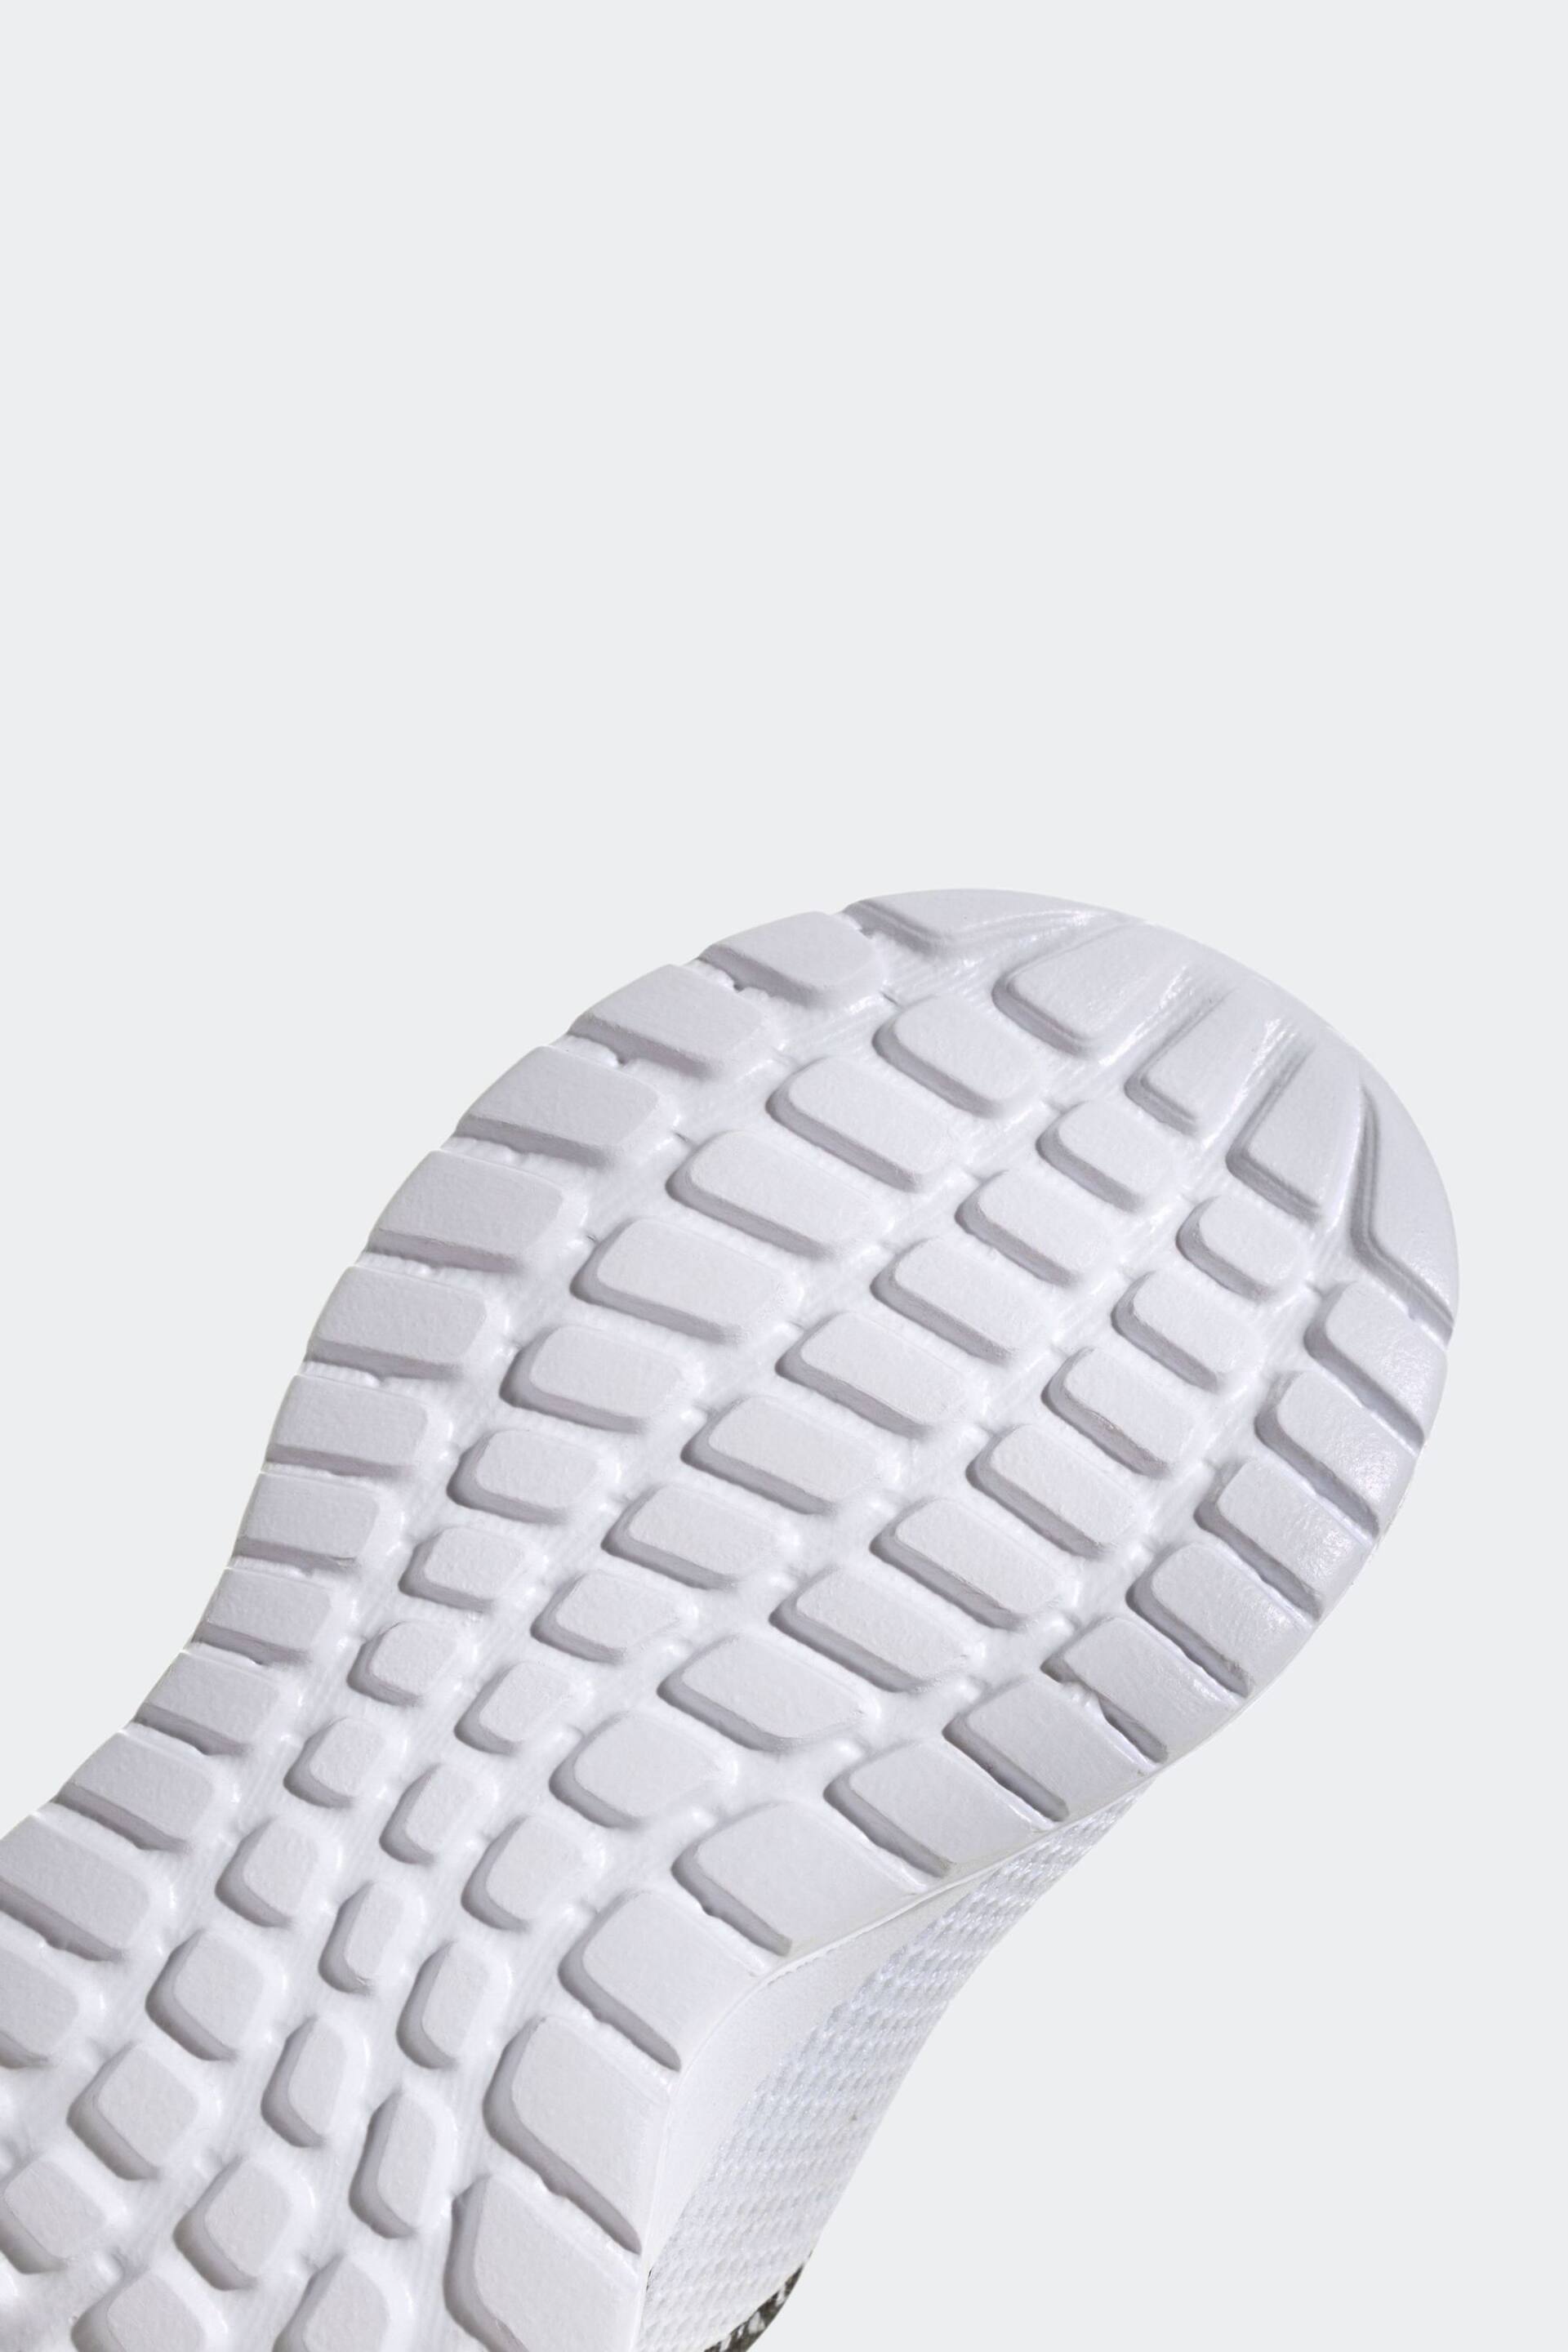 adidas White/Black Infant Sportswear Tensaur Run Trainers - Image 8 of 8